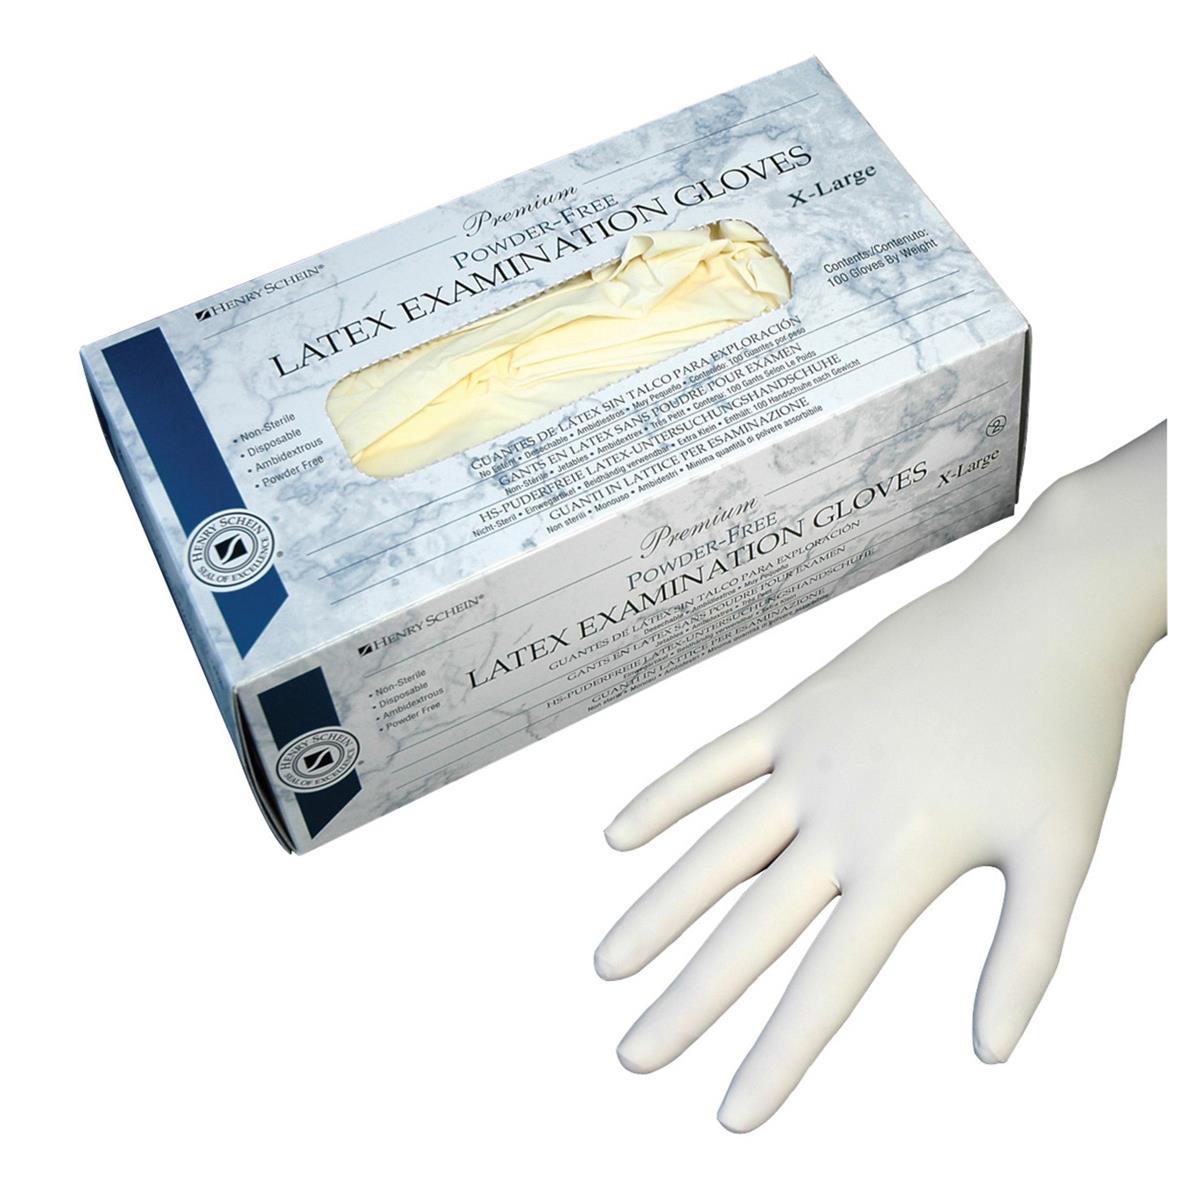 powderless latex gloves